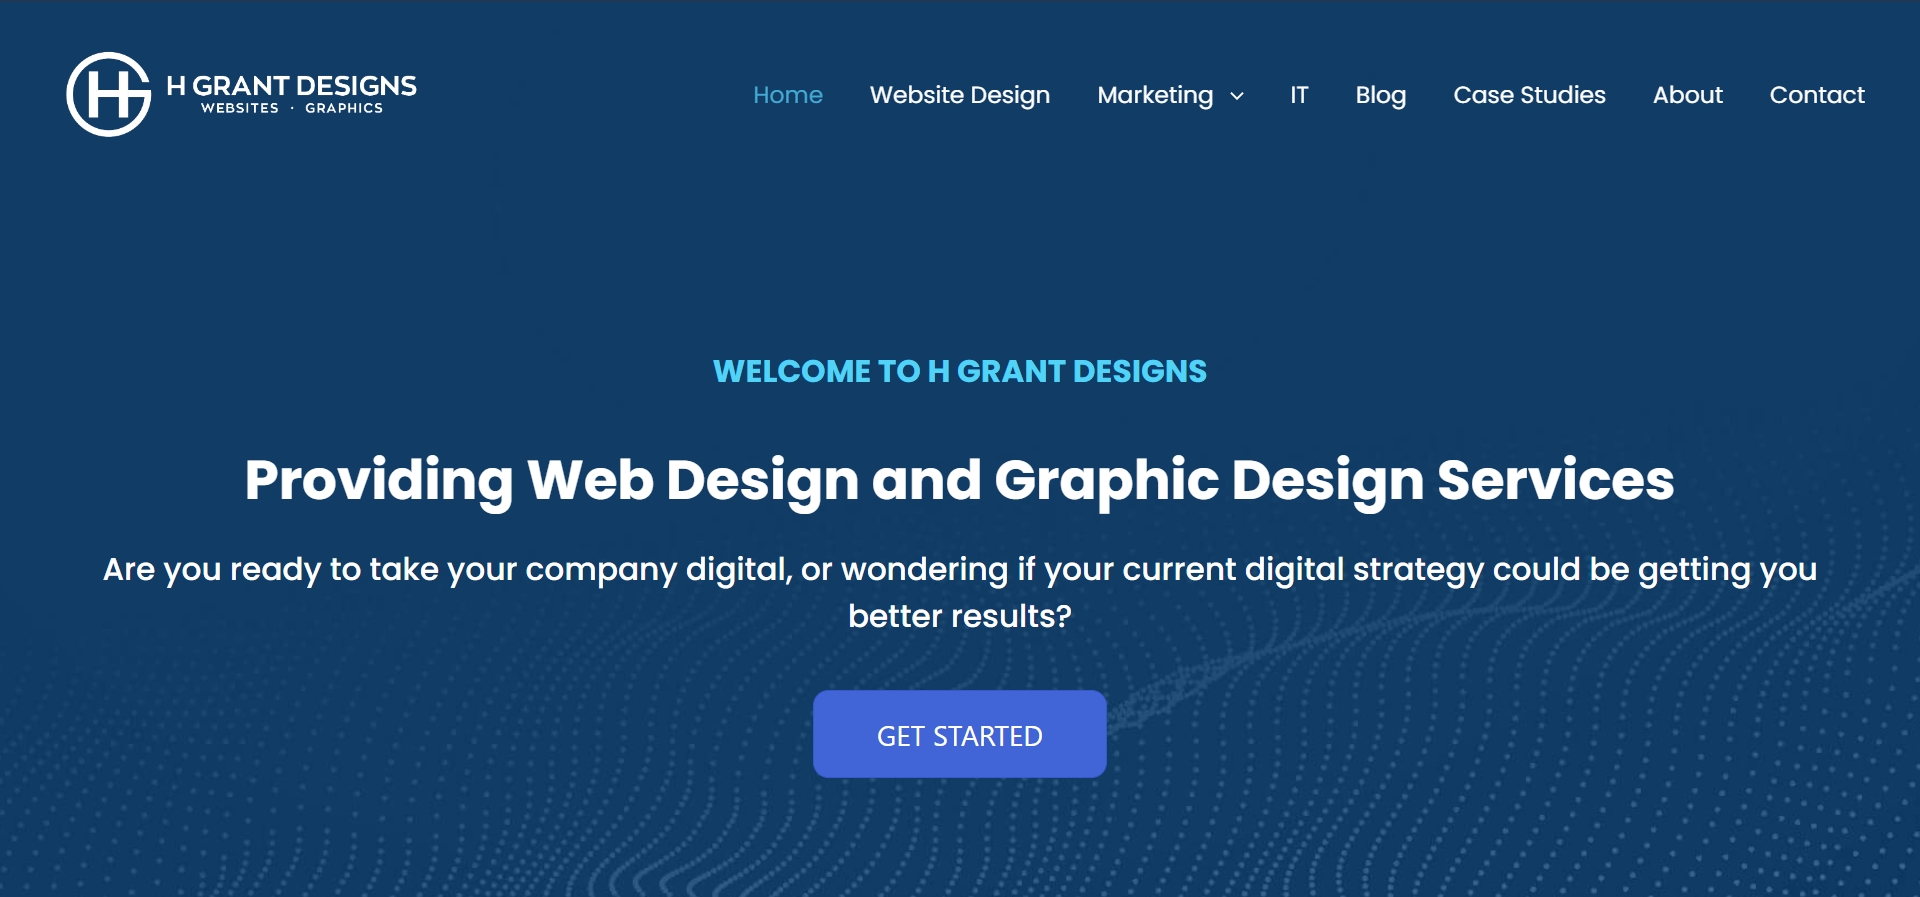 h grant designs homepage